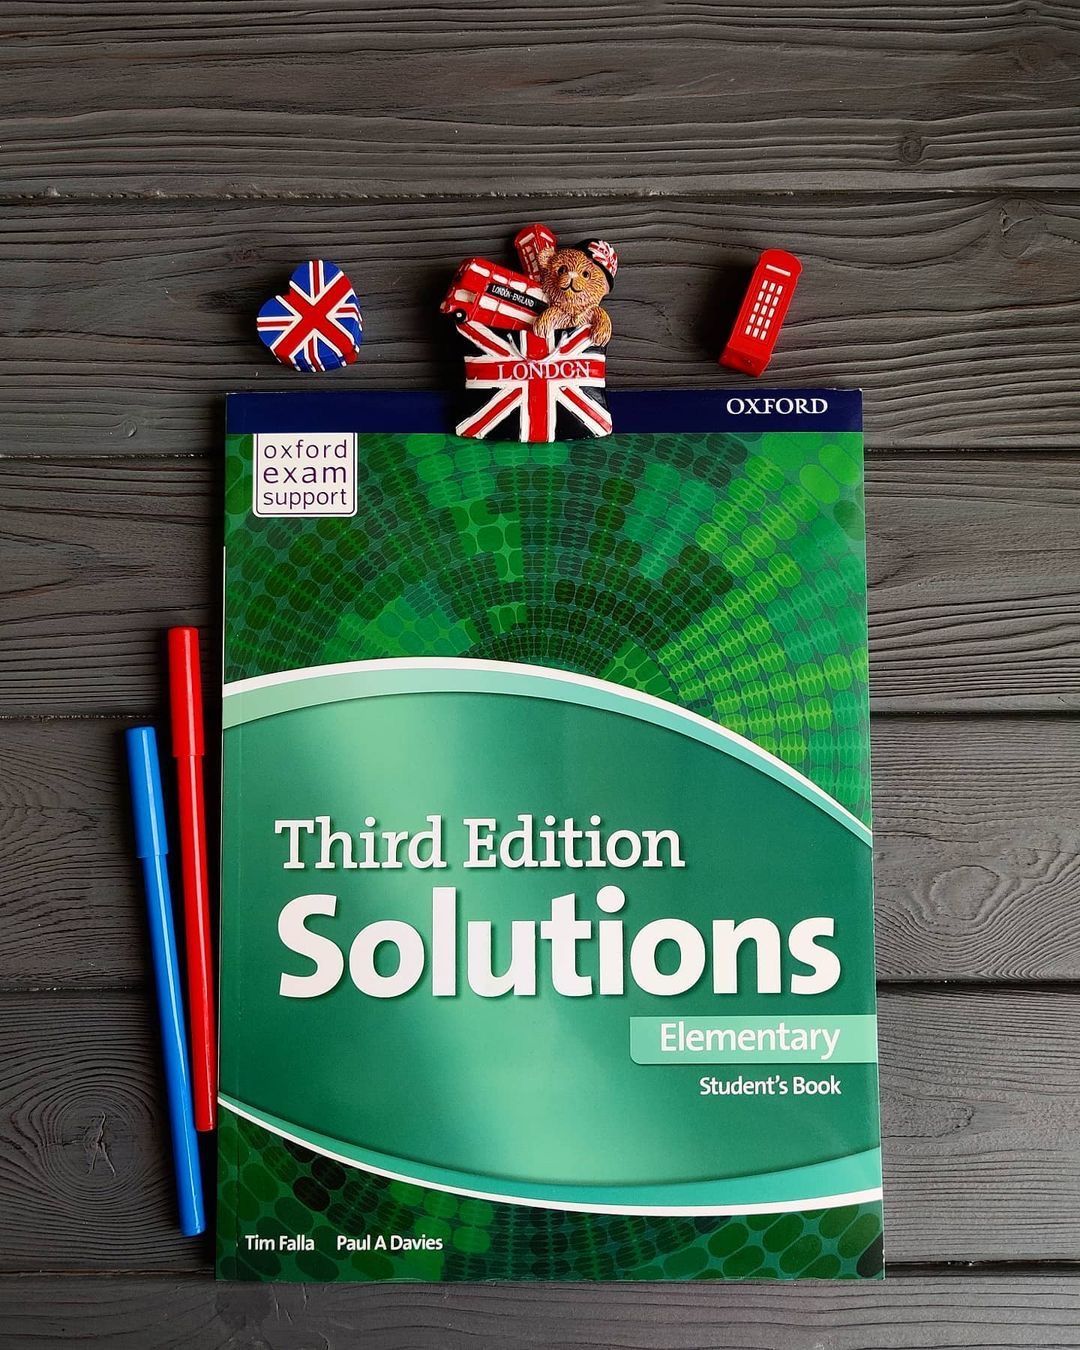 Solutions учебник. Учебник Солюшенс элементари. Solution Elementary students book 3 Edition. Third Edition solutions Elementary student's book.